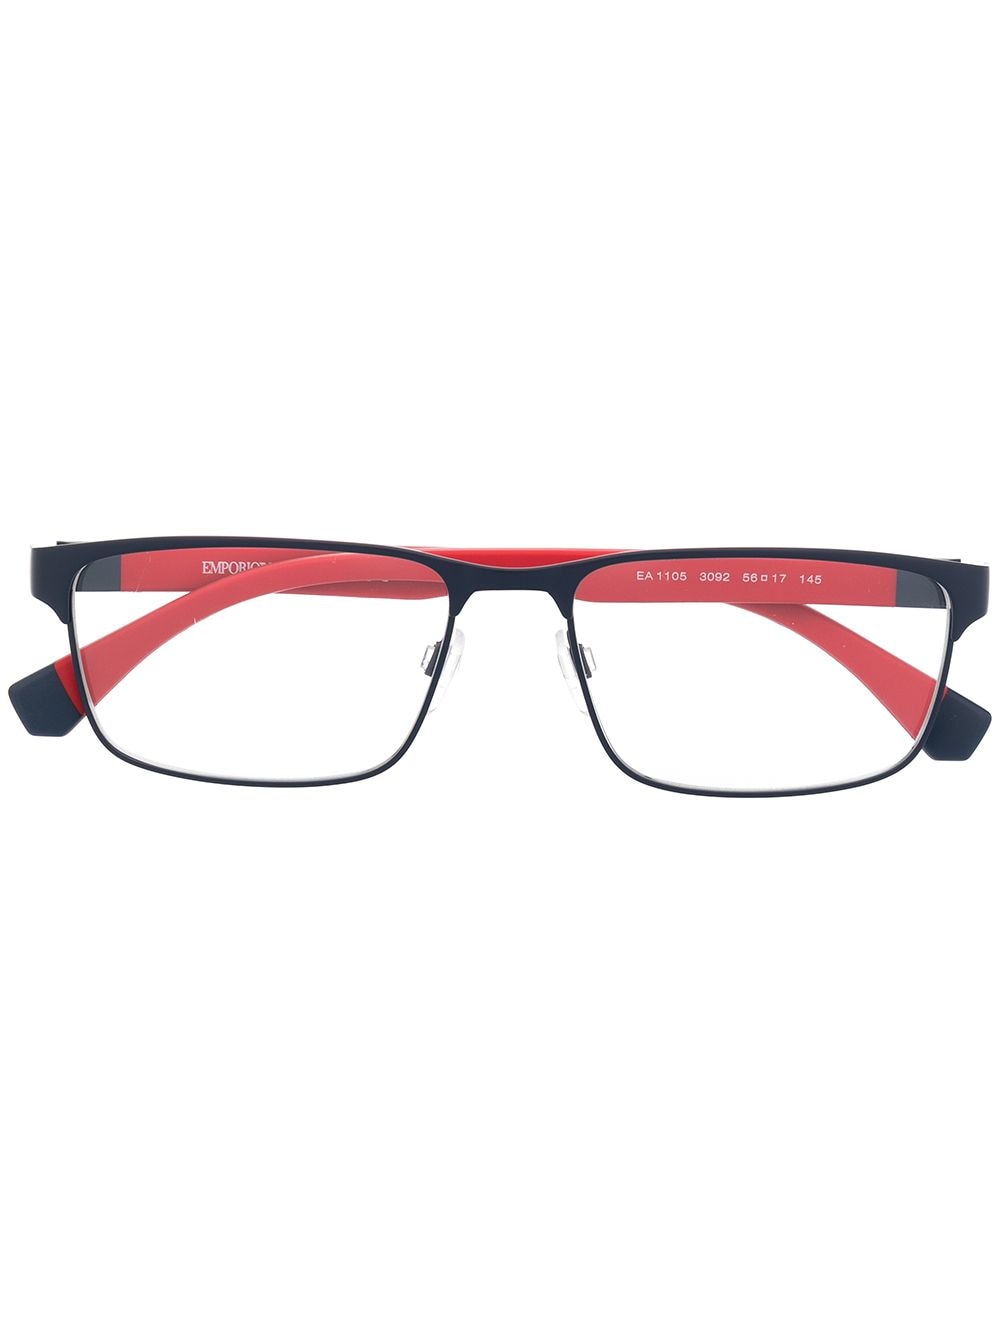 фото Emporio armani очки с тисненым логотипом